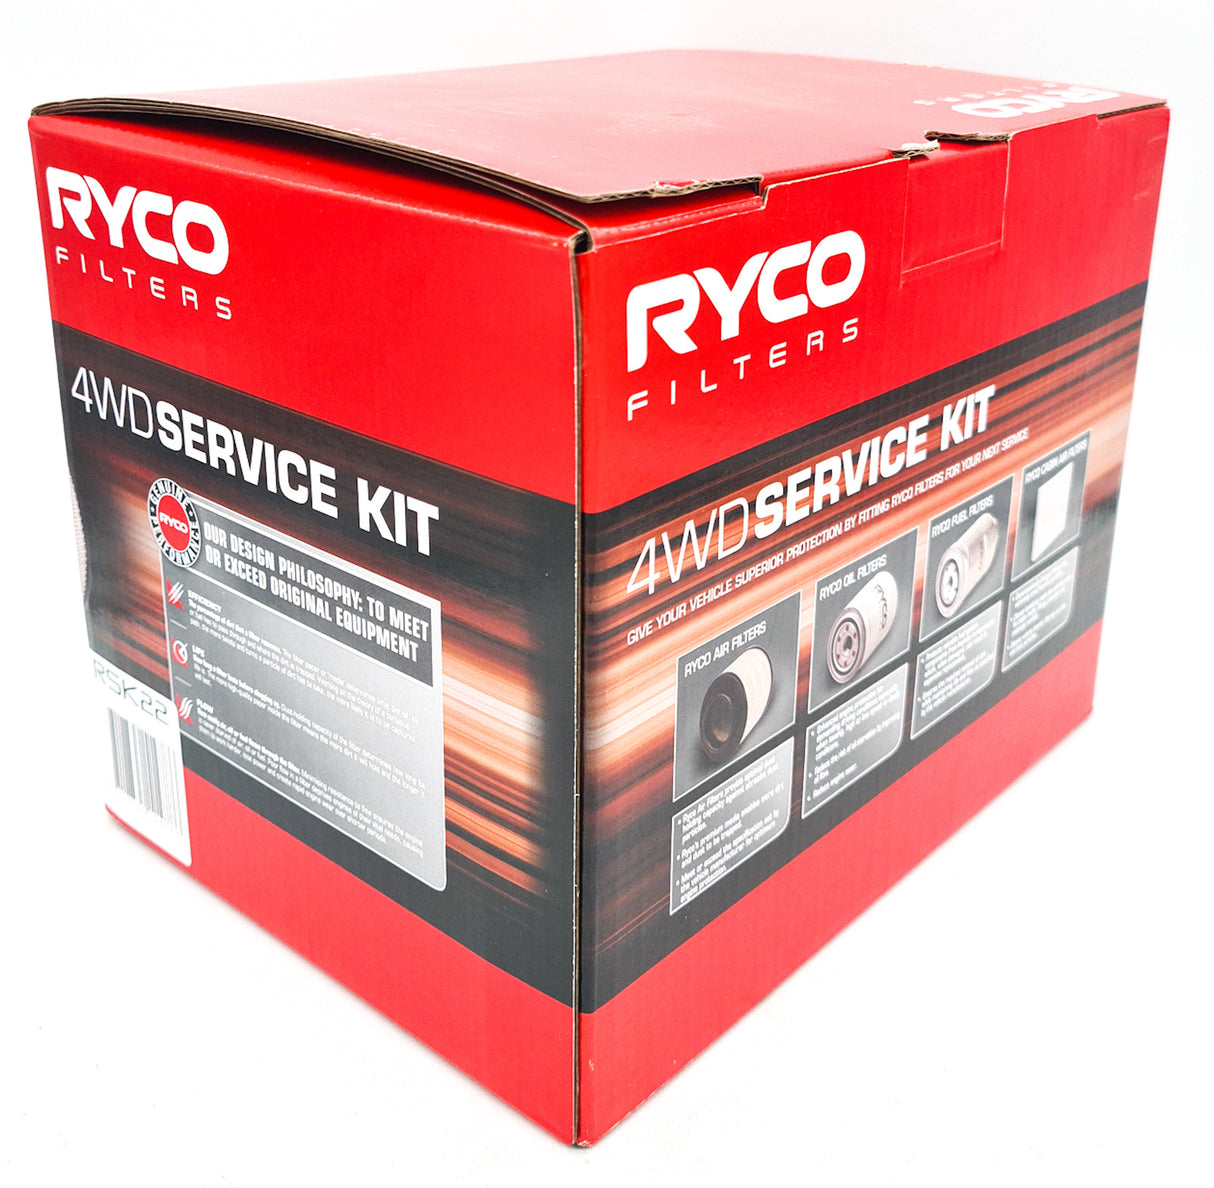 Oil Air Fuel Filter Service Kit Ryco for Hilux LN106 LN111 LN85 LN86 2.8L Diesel RSK22